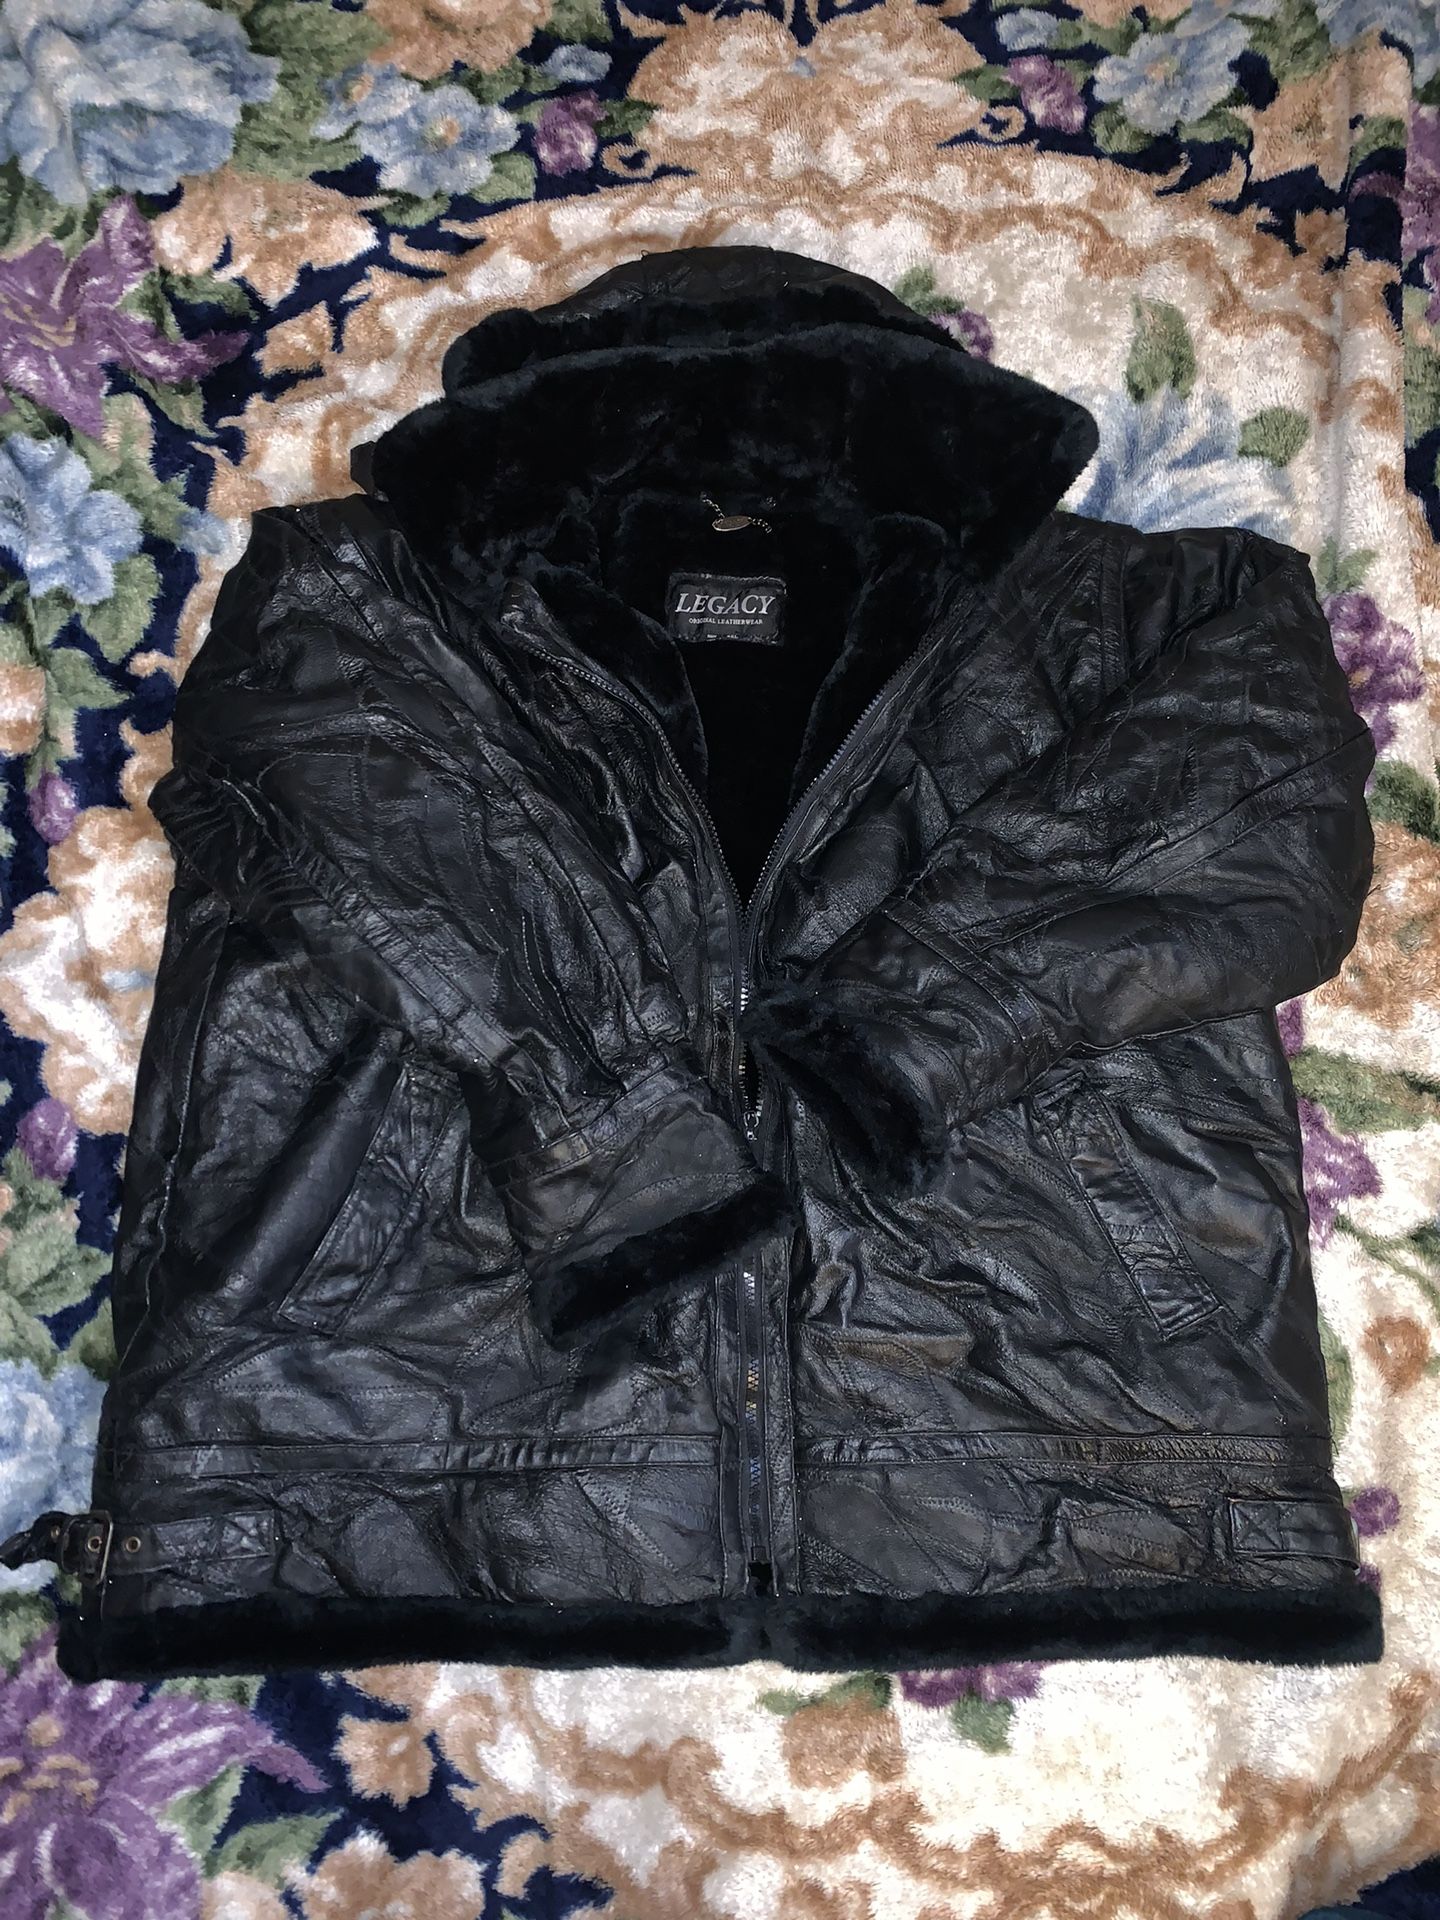 2 Leather jackets